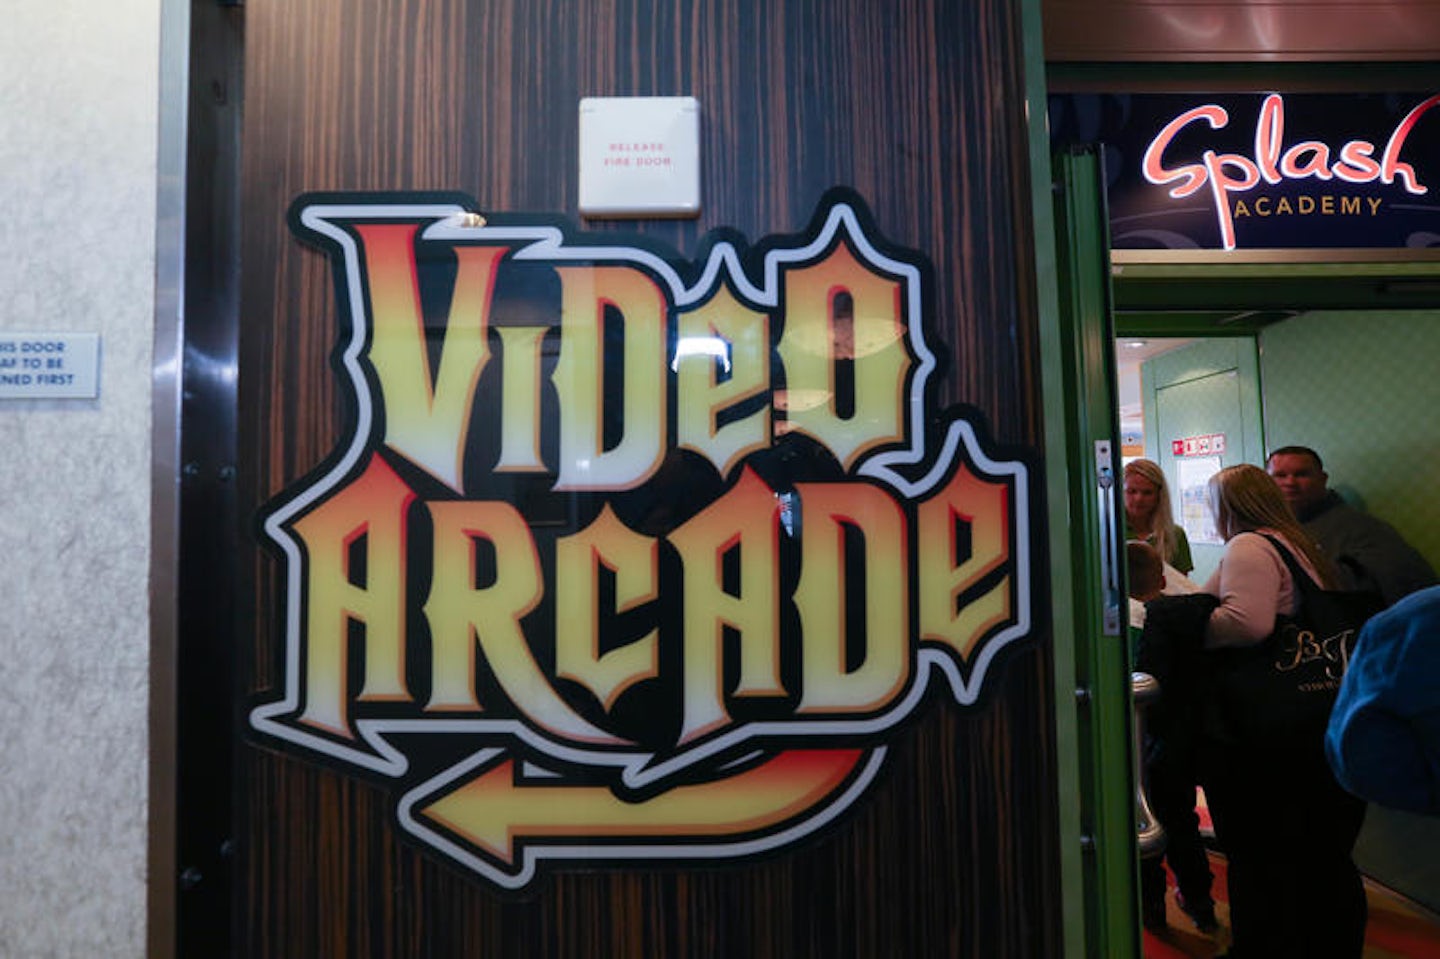 Video Arcade on Norwegian Gem